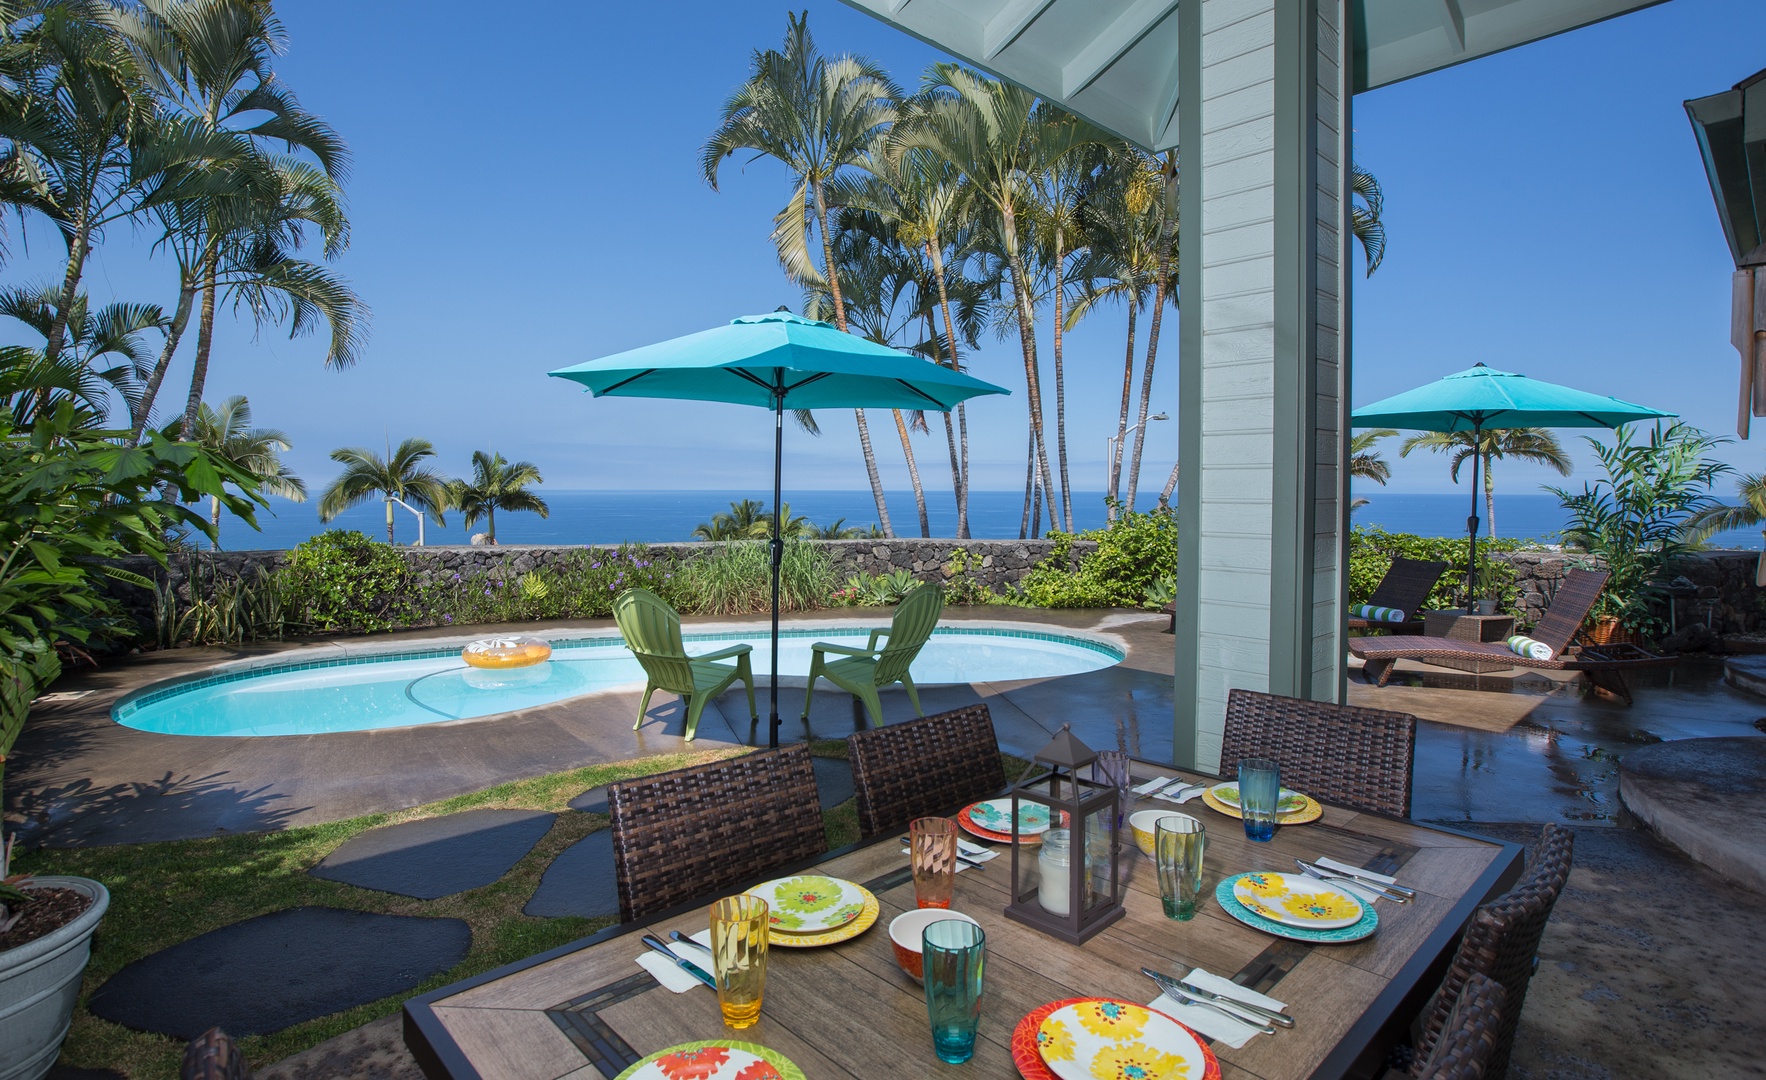 Kailua Kona Vacation Rentals, 7 C's Kona (Big Island) - Welcome to 7 C's Kona! Enjoy the private pool, ocean views, and dining on the lanai.